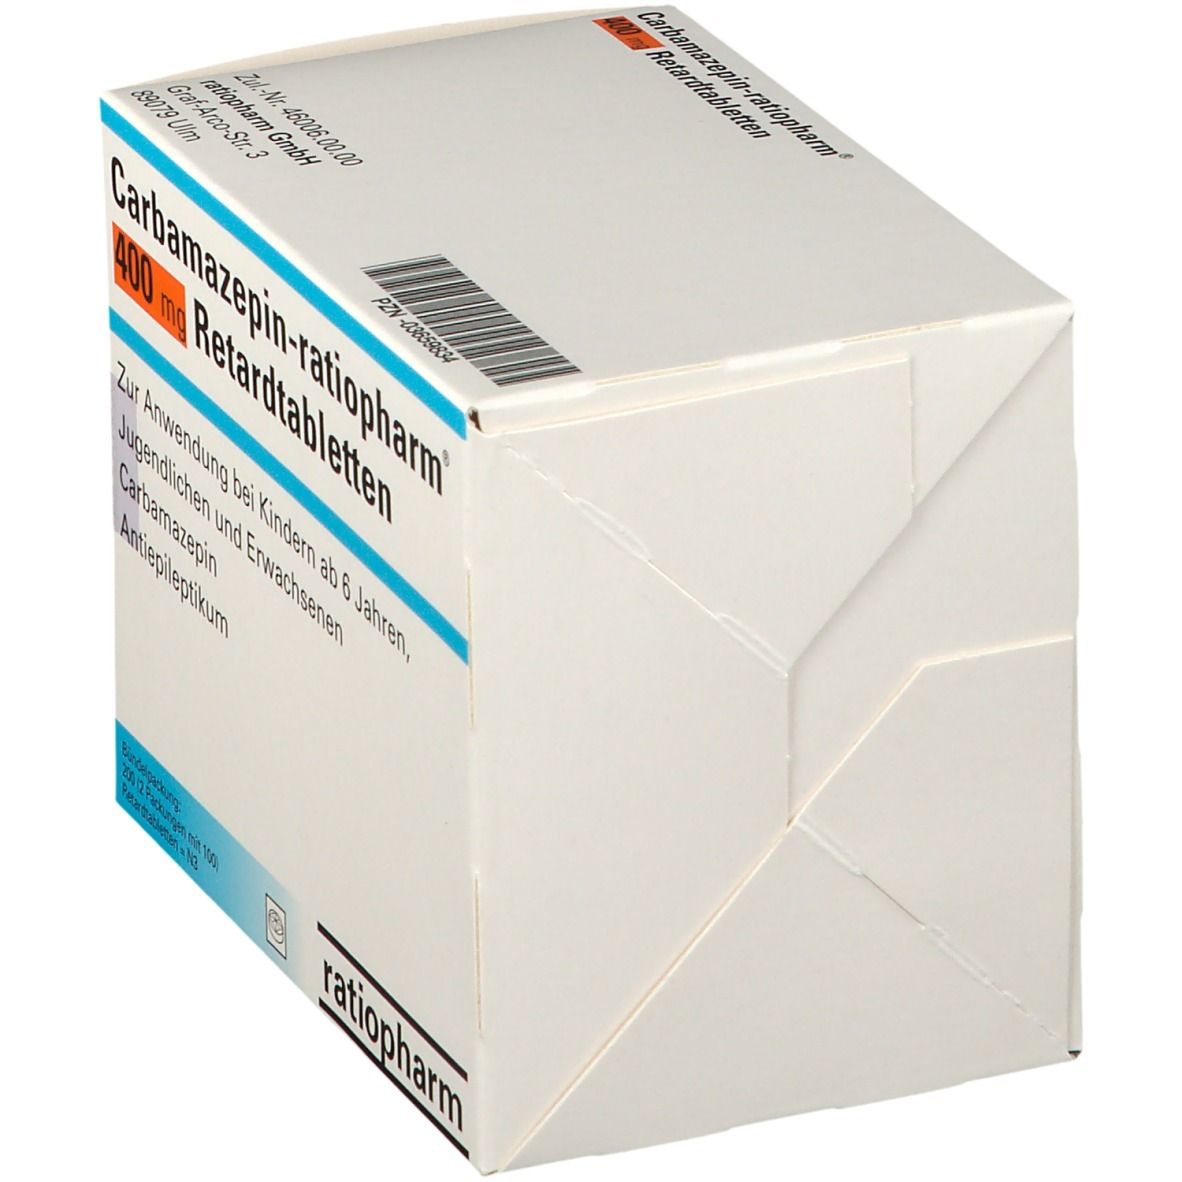 Carbamazepin-ratiopharm® 400 mg